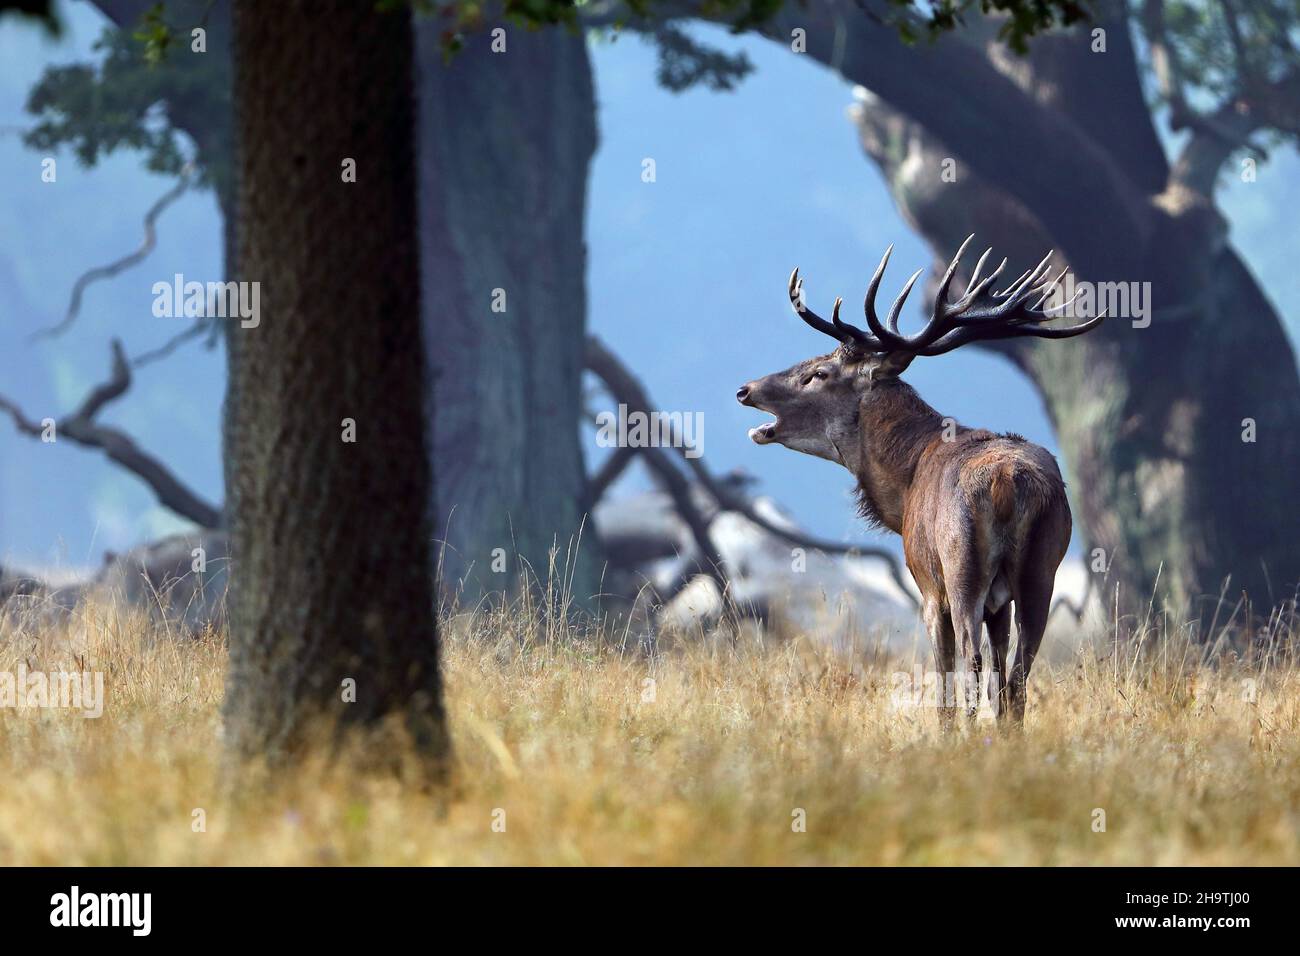 red deer (Cervus elaphus), Roaring stag at forest edge, Denmark Stock Photo